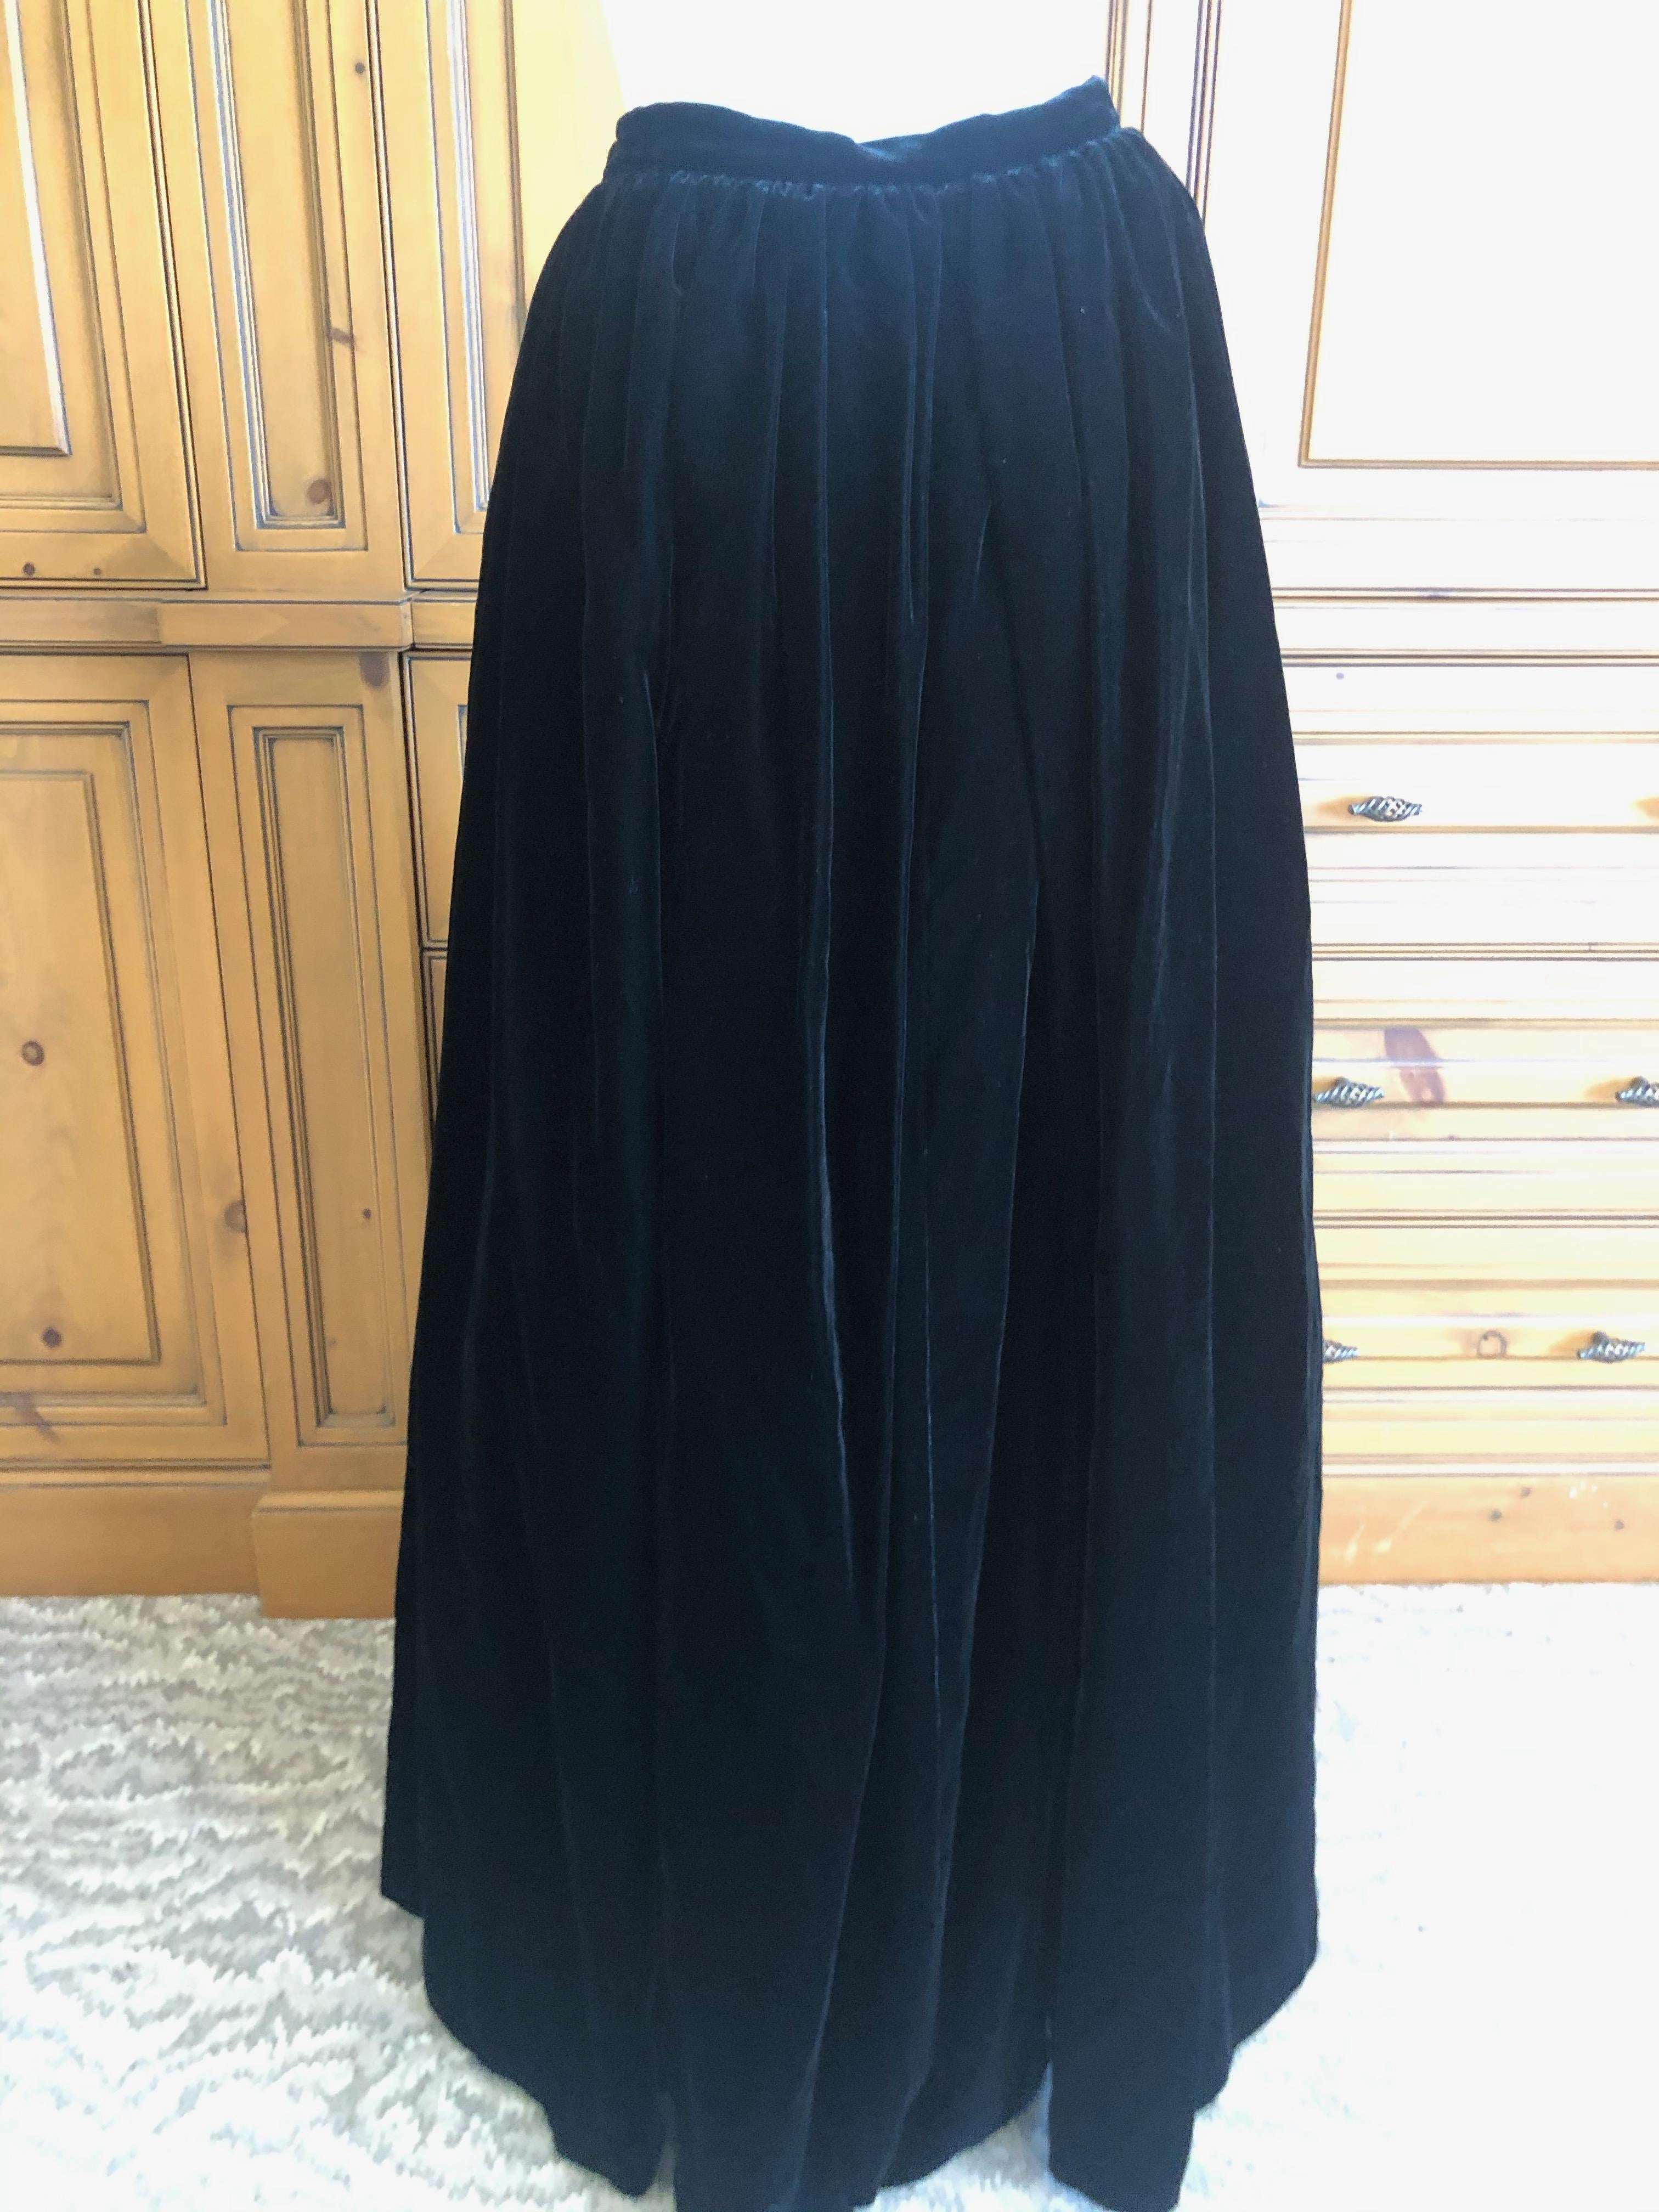 Yves Saint Laurent Rive Gauche Vintage 70's  Black Velvet Ball Skirt & Petticoat In Excellent Condition For Sale In Cloverdale, CA